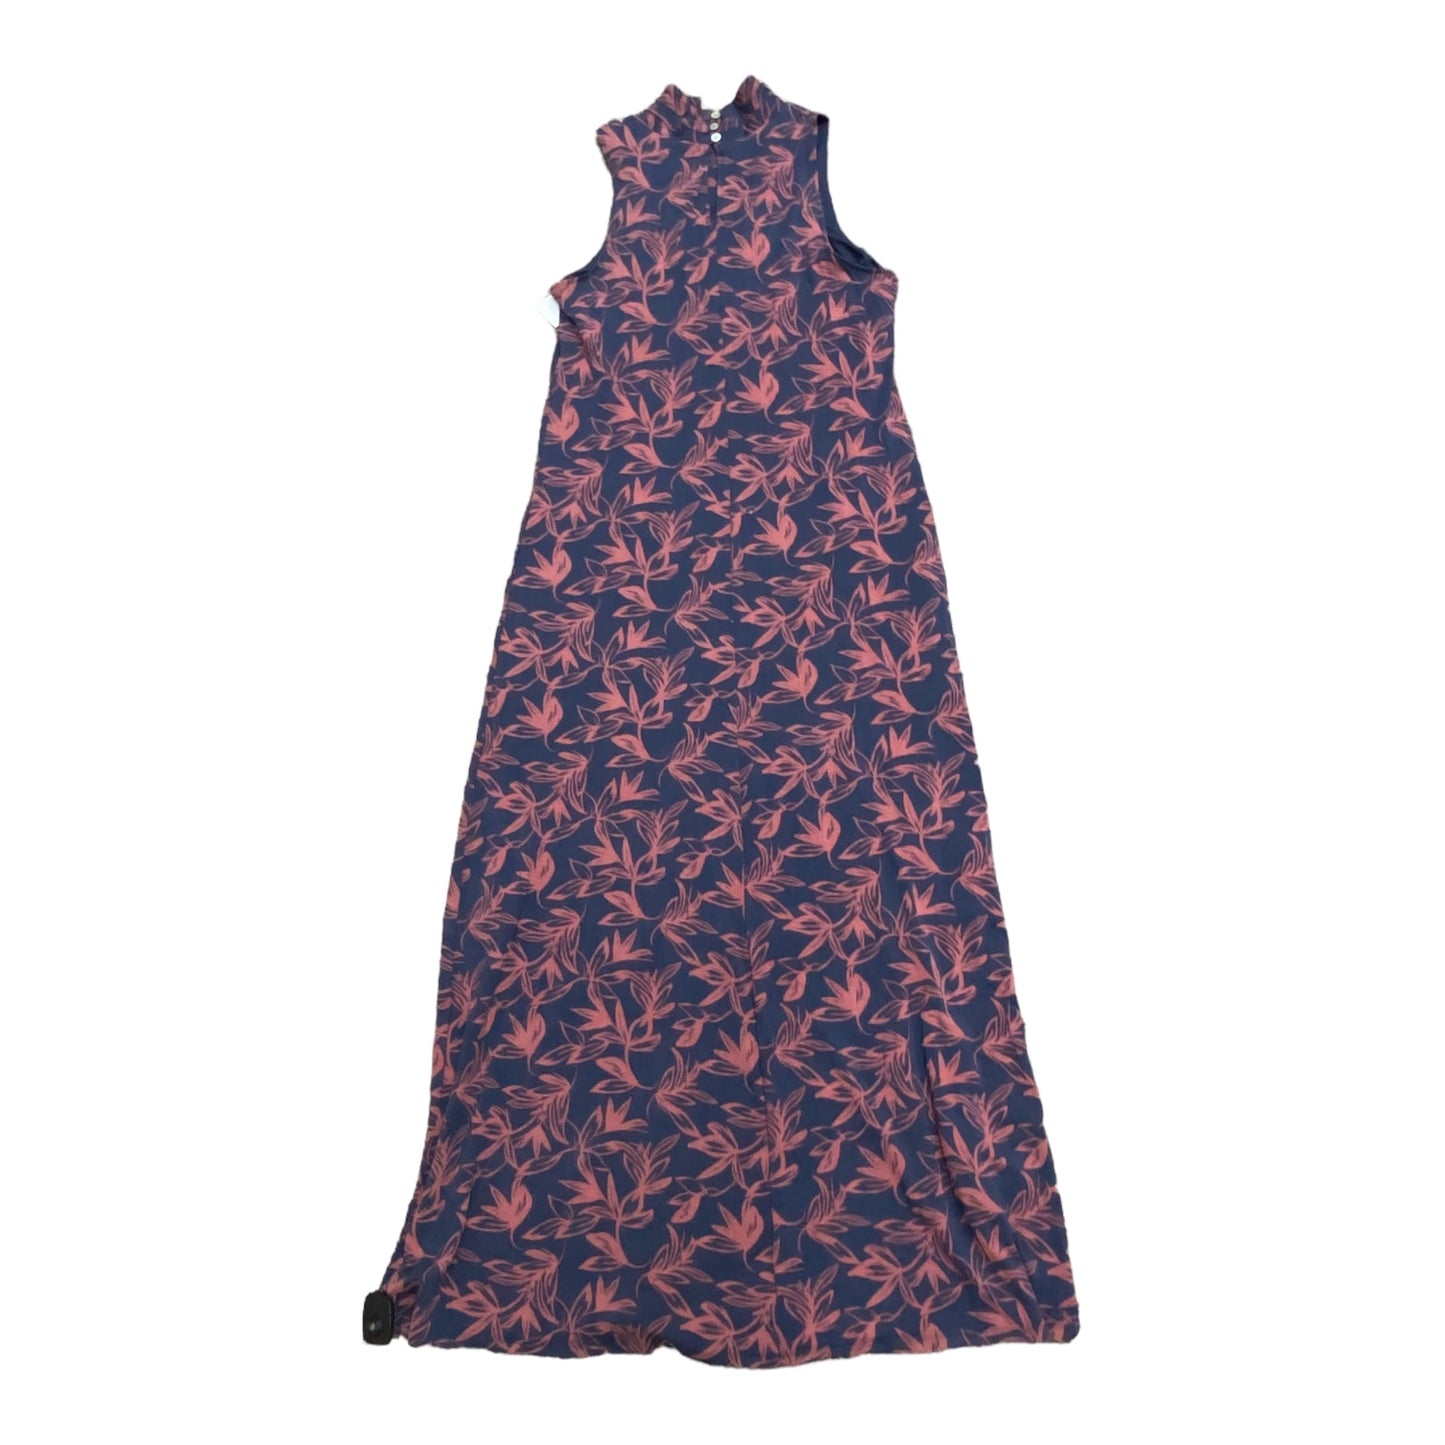 Dress Casual Maxi By Garnet Hill  Size: M